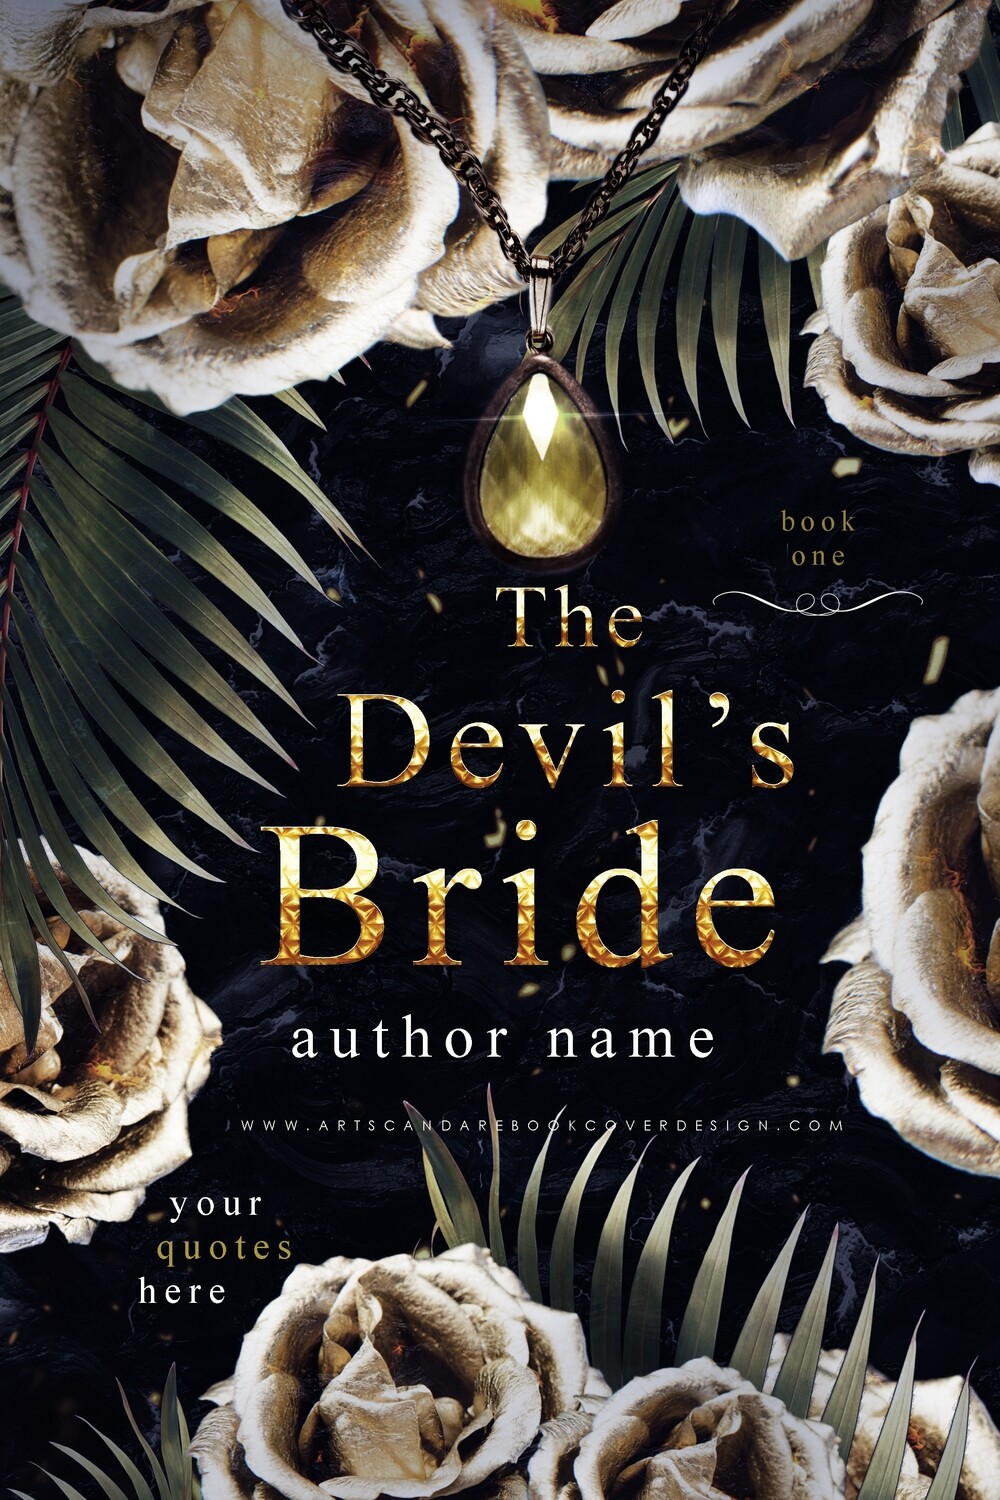 Ebook: The Devil's Bride DUOLOGY